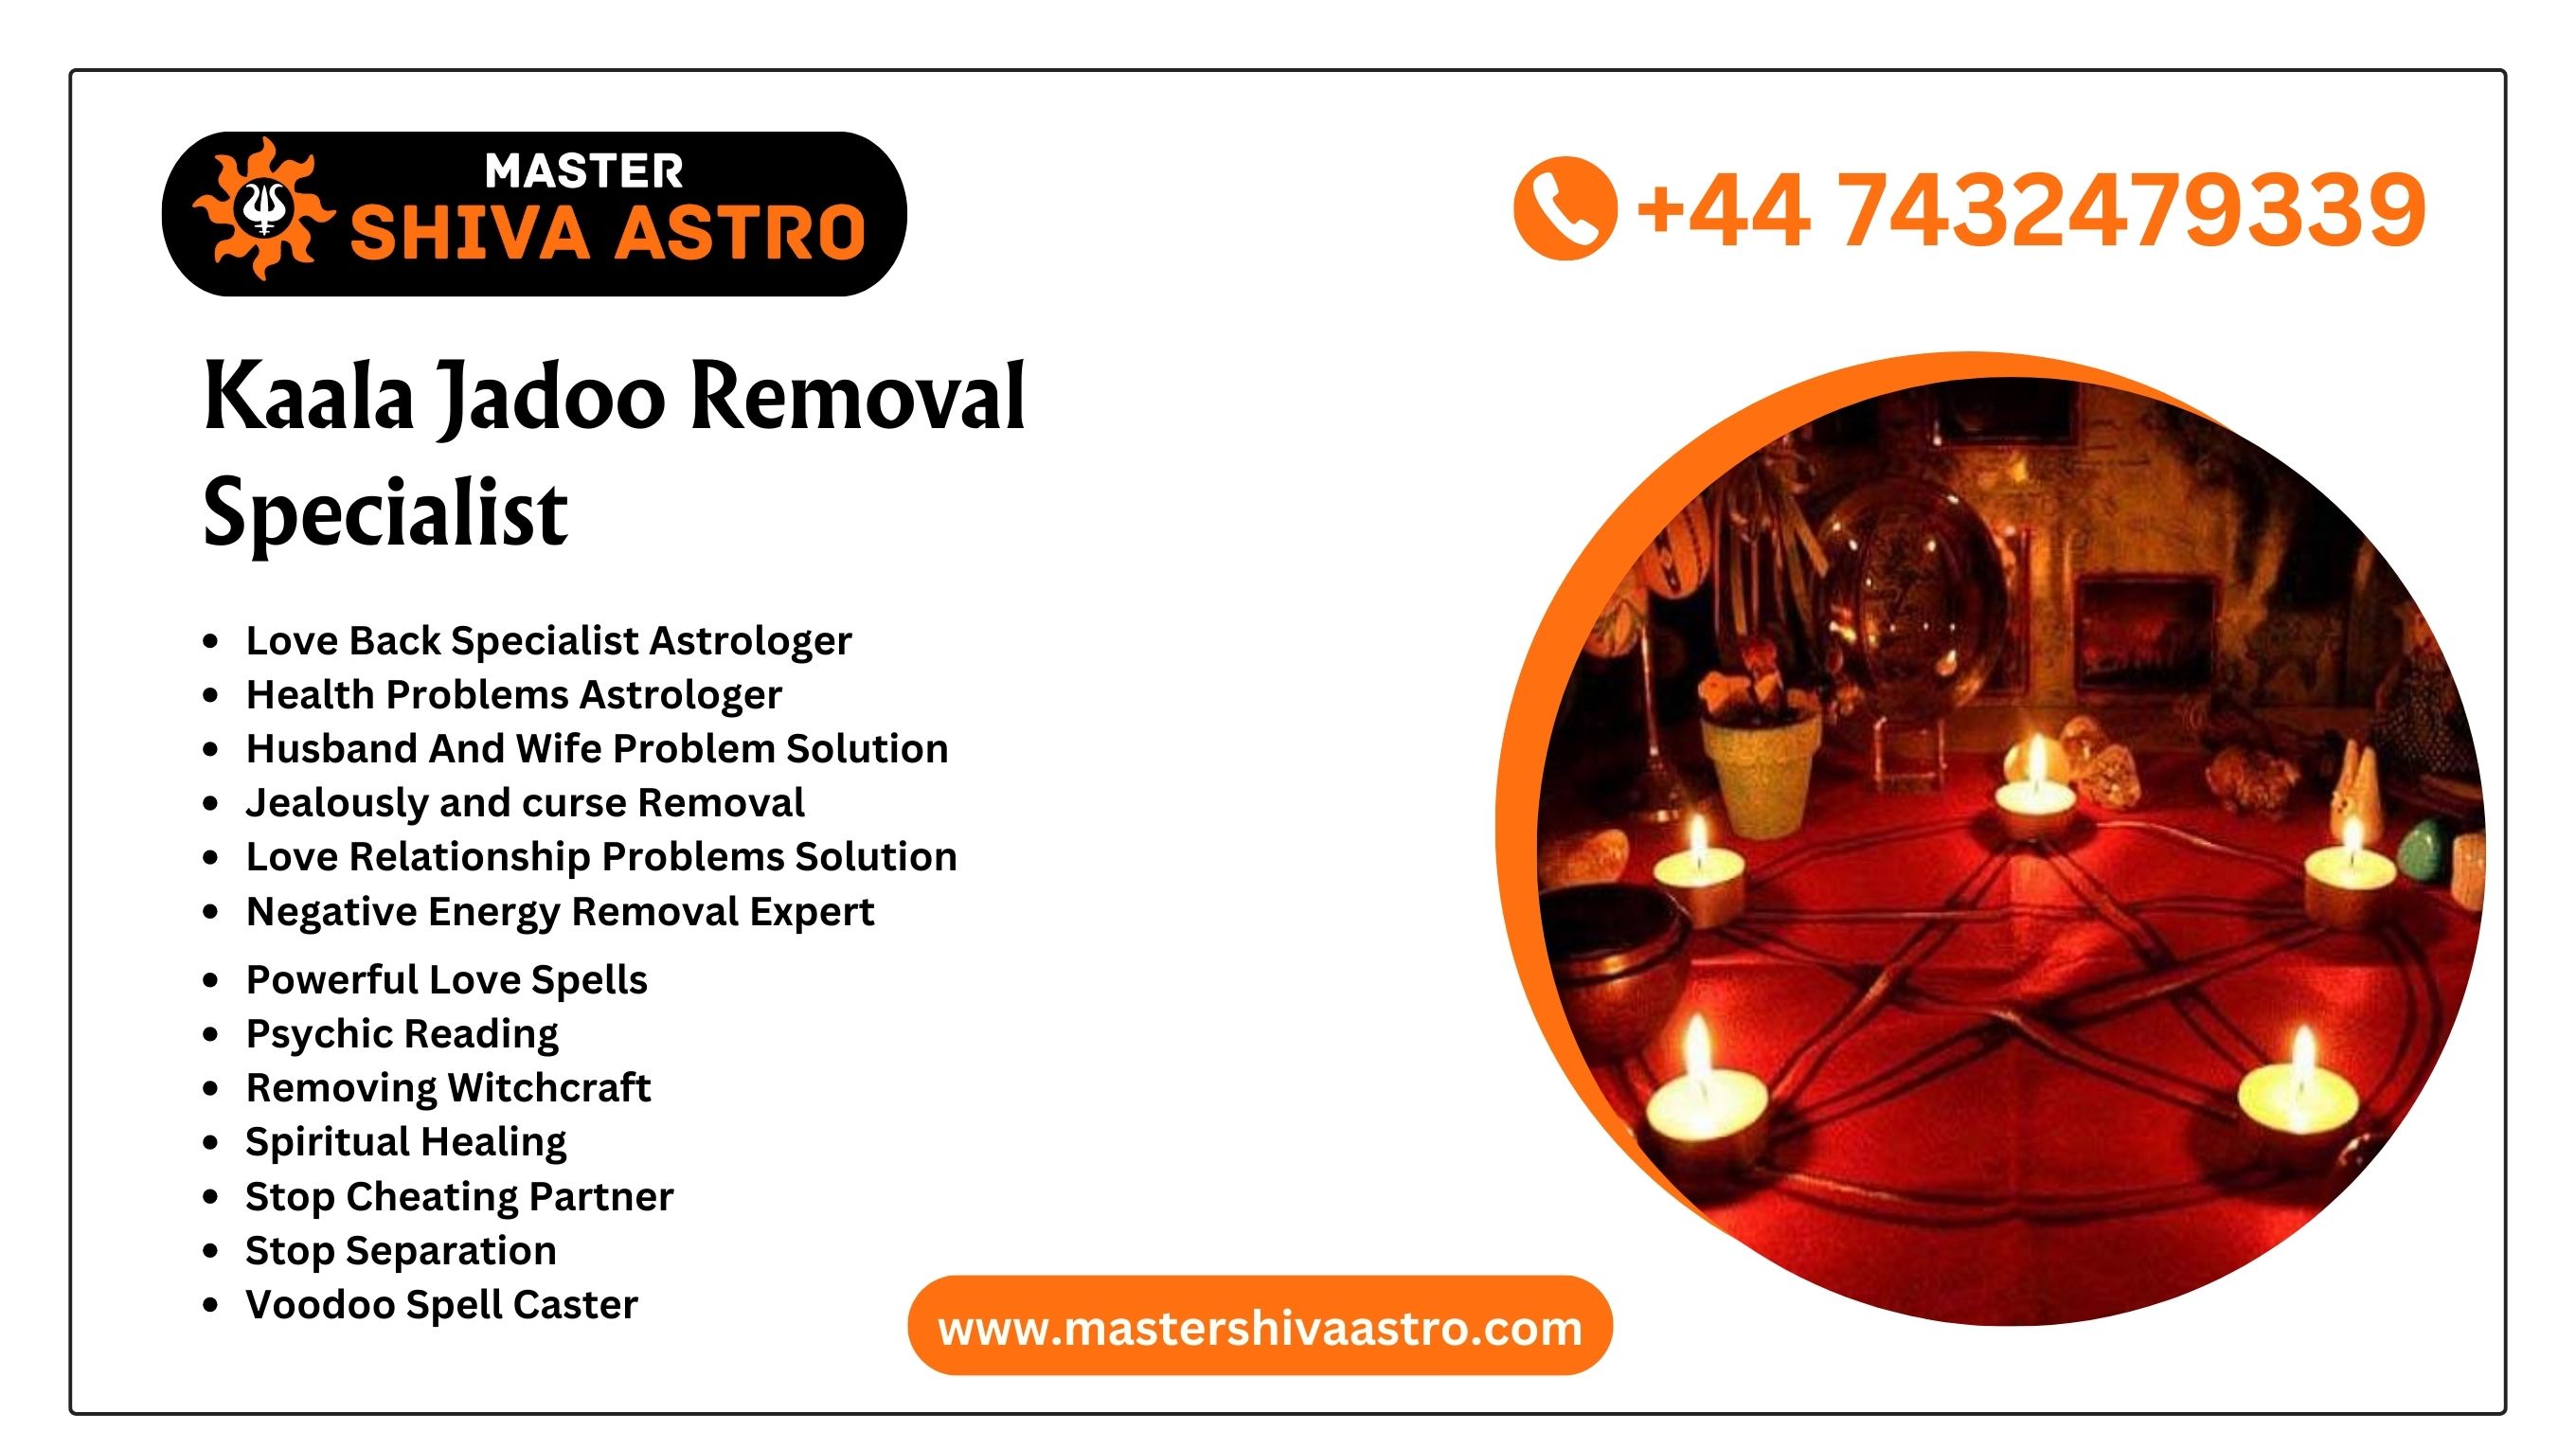 Kaala Jadoo Removal Specialist - Master Shiva